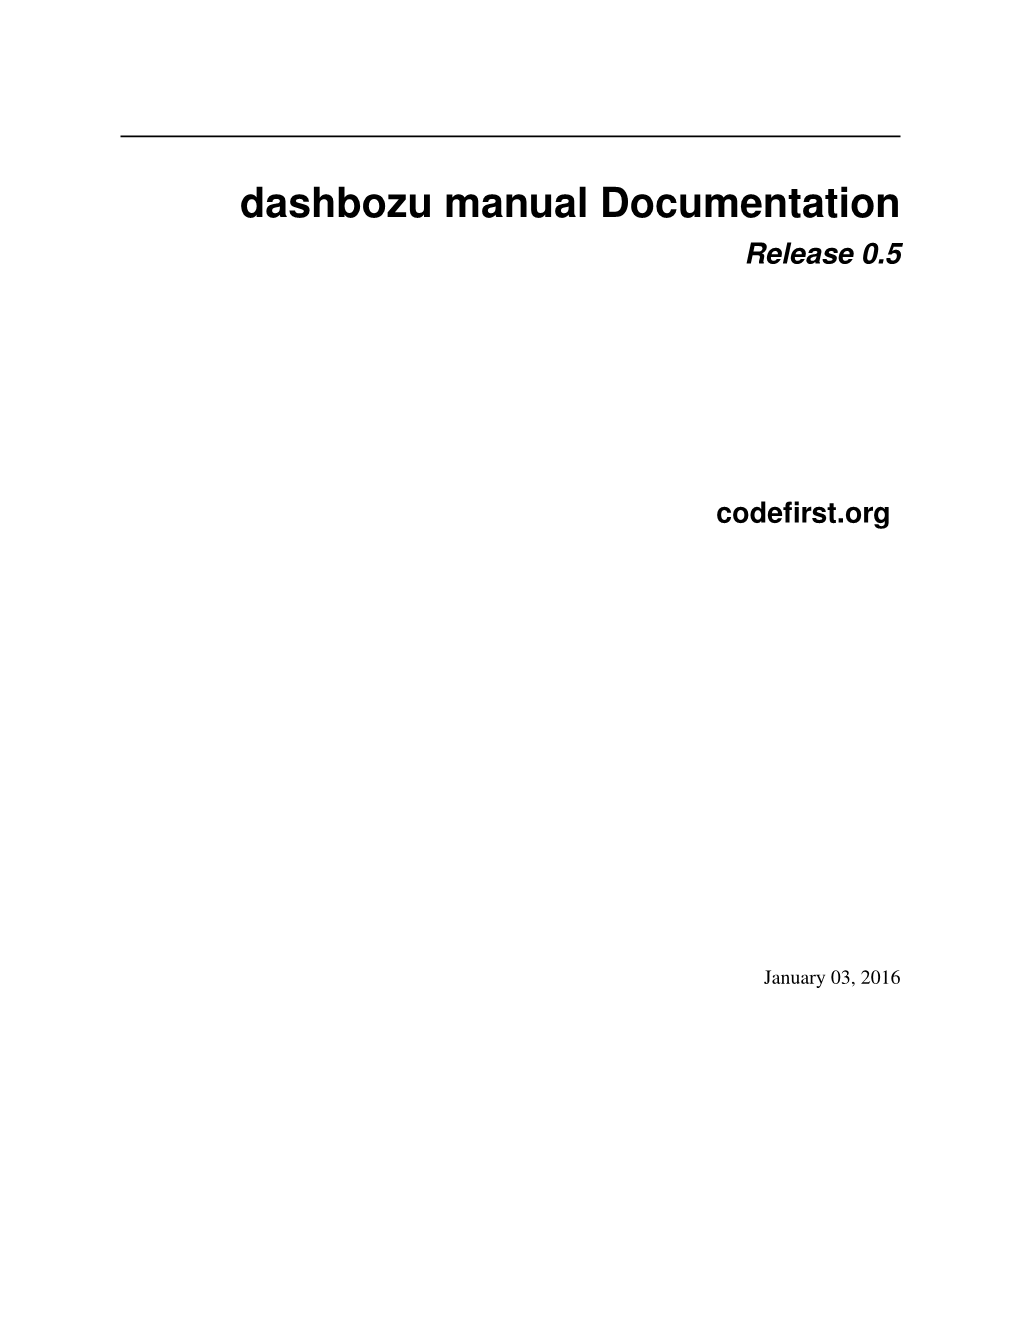 Dashbozu Manual Documentation Release 0.5